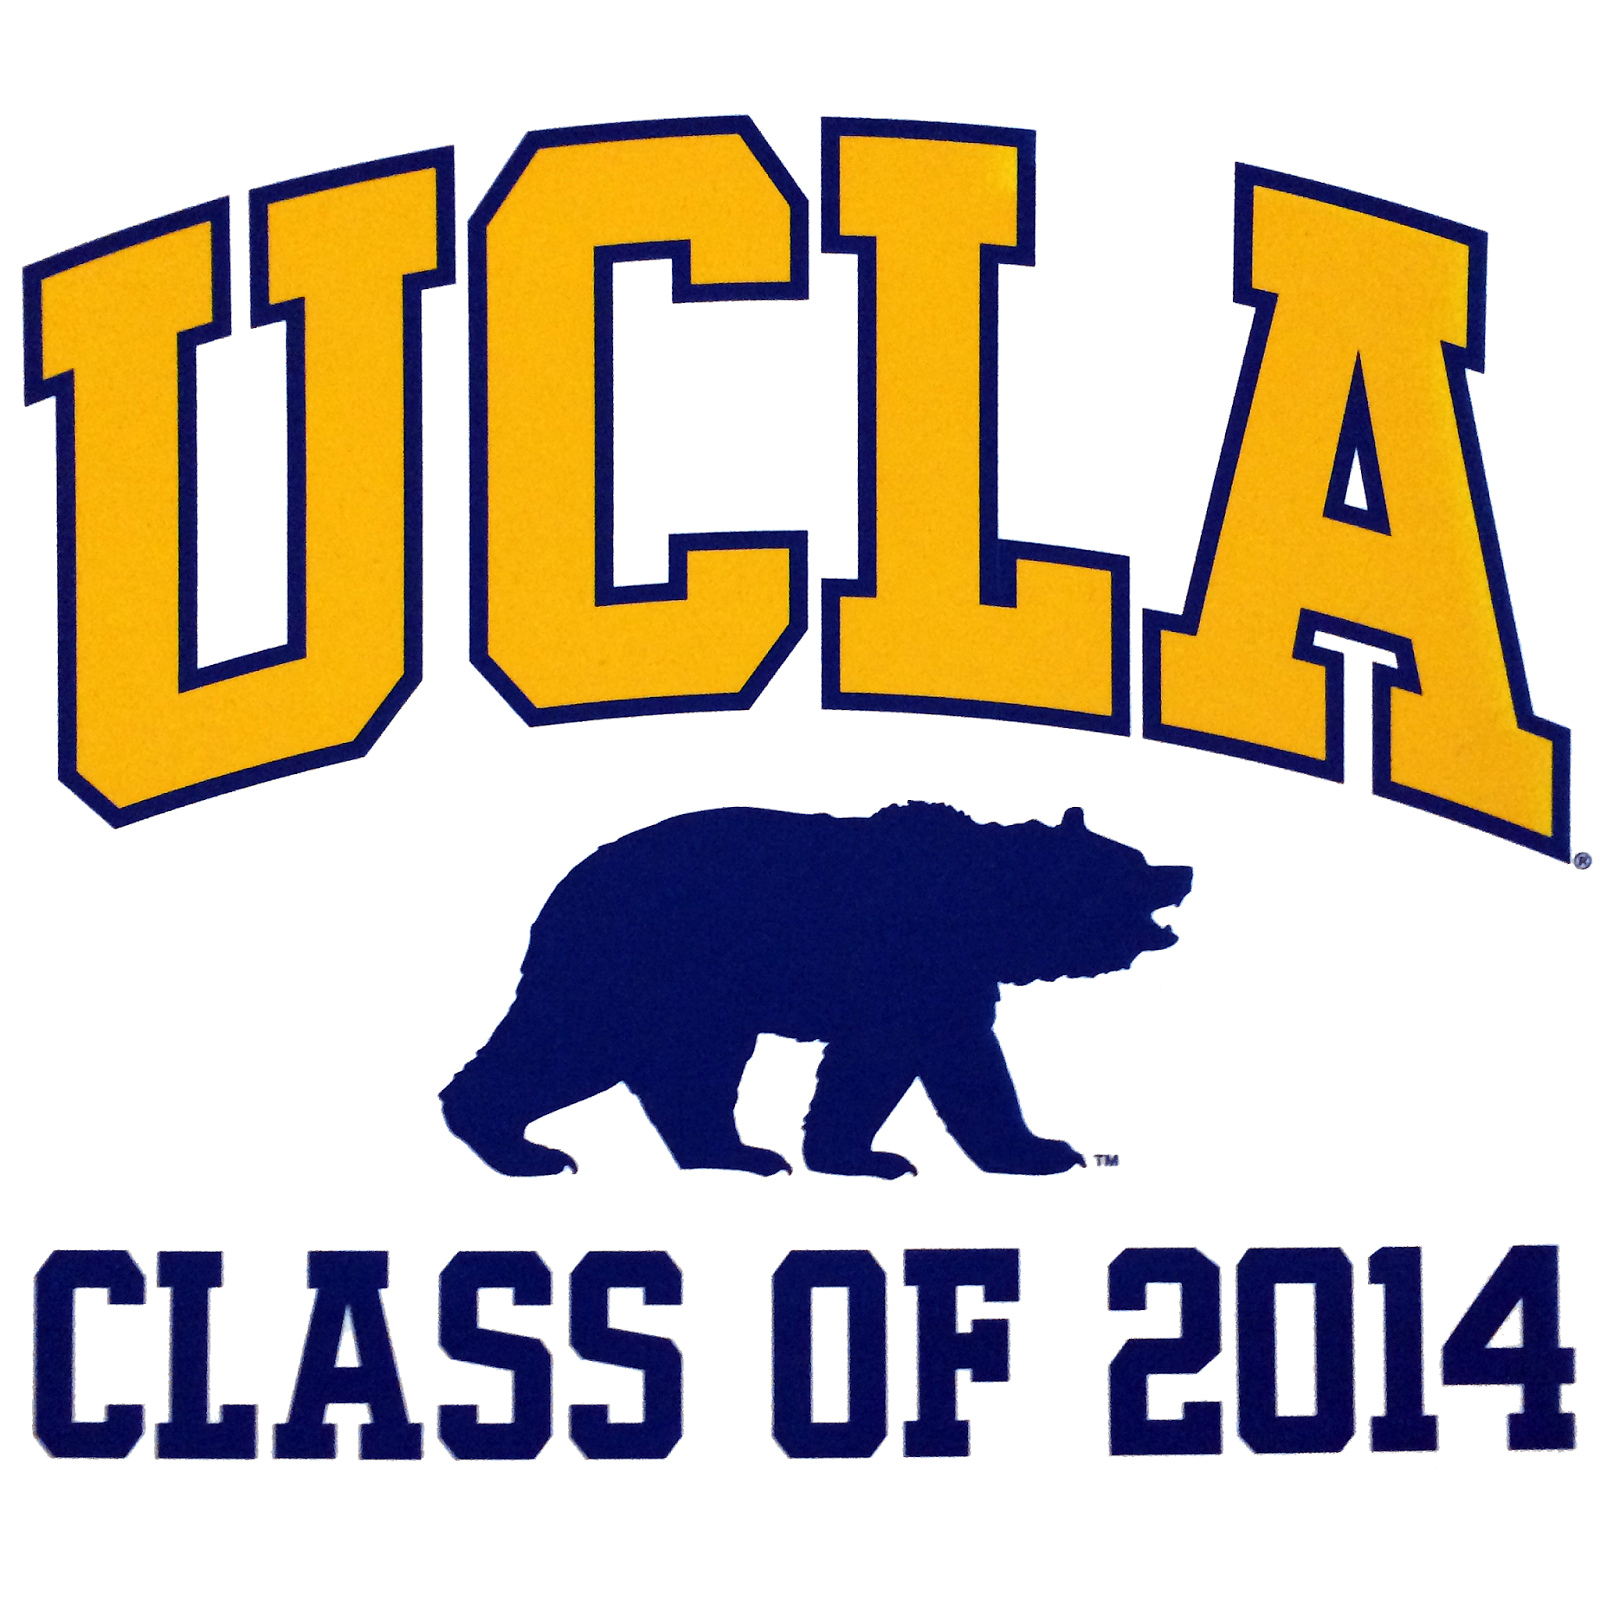 The UCLA Department of Classics